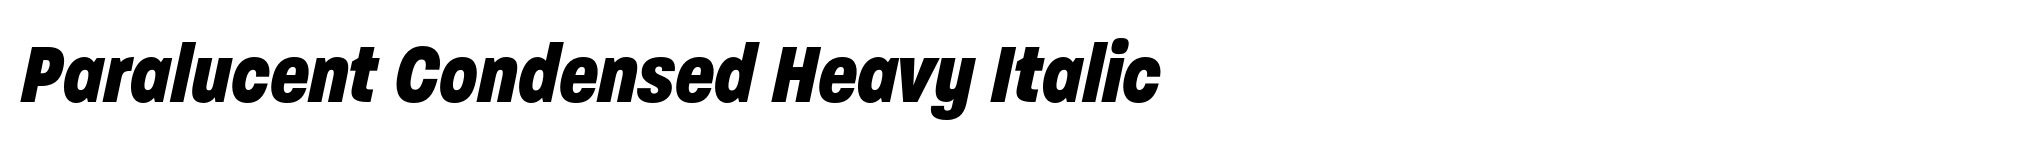 Paralucent Condensed Heavy Italic image